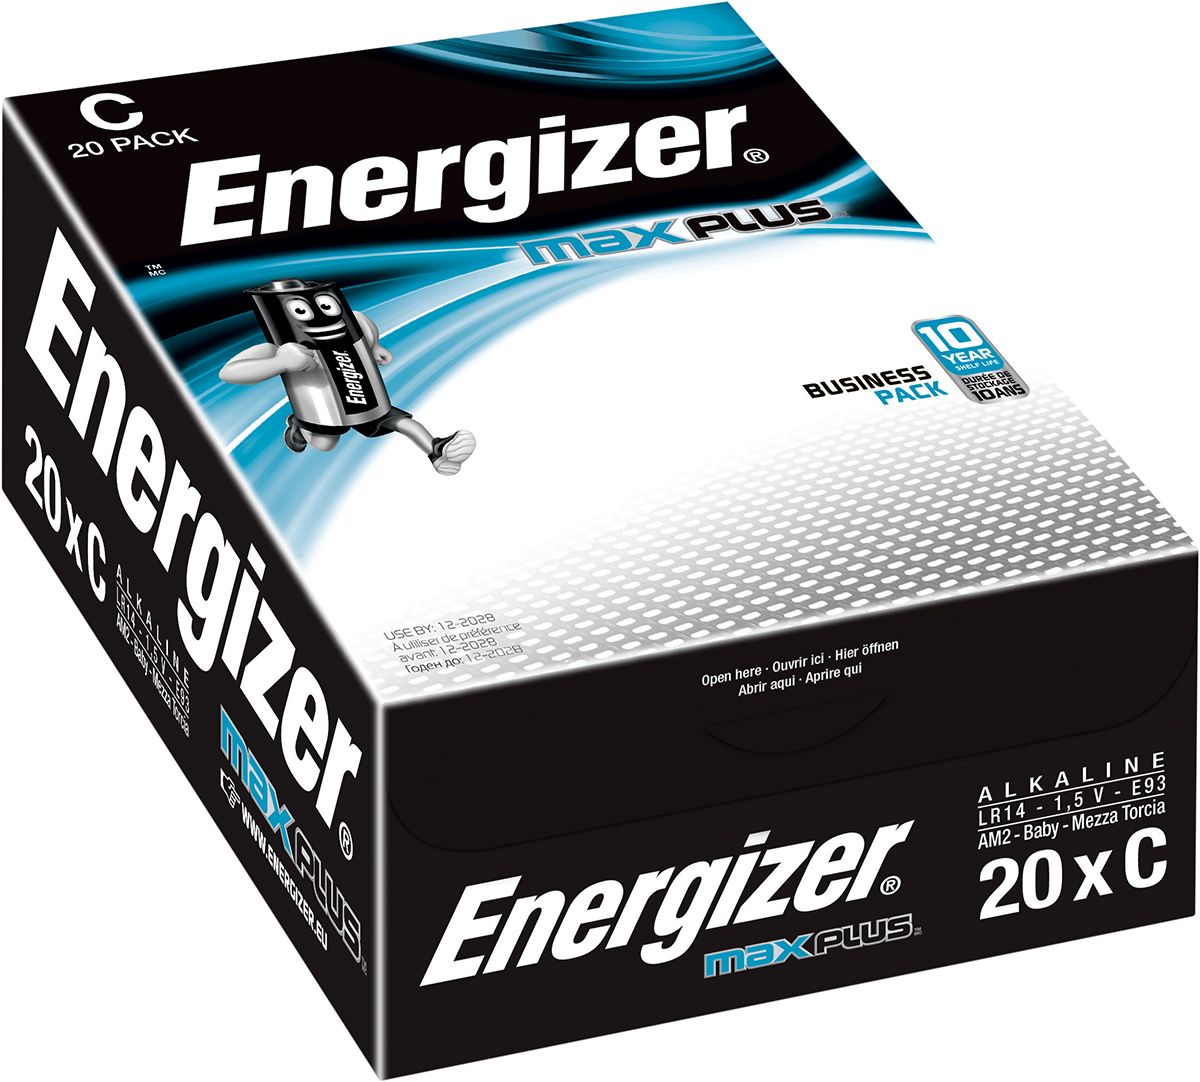 Energizer MAX Energizer 1.5V Alkaline C Batteries With Standard Terminal Type